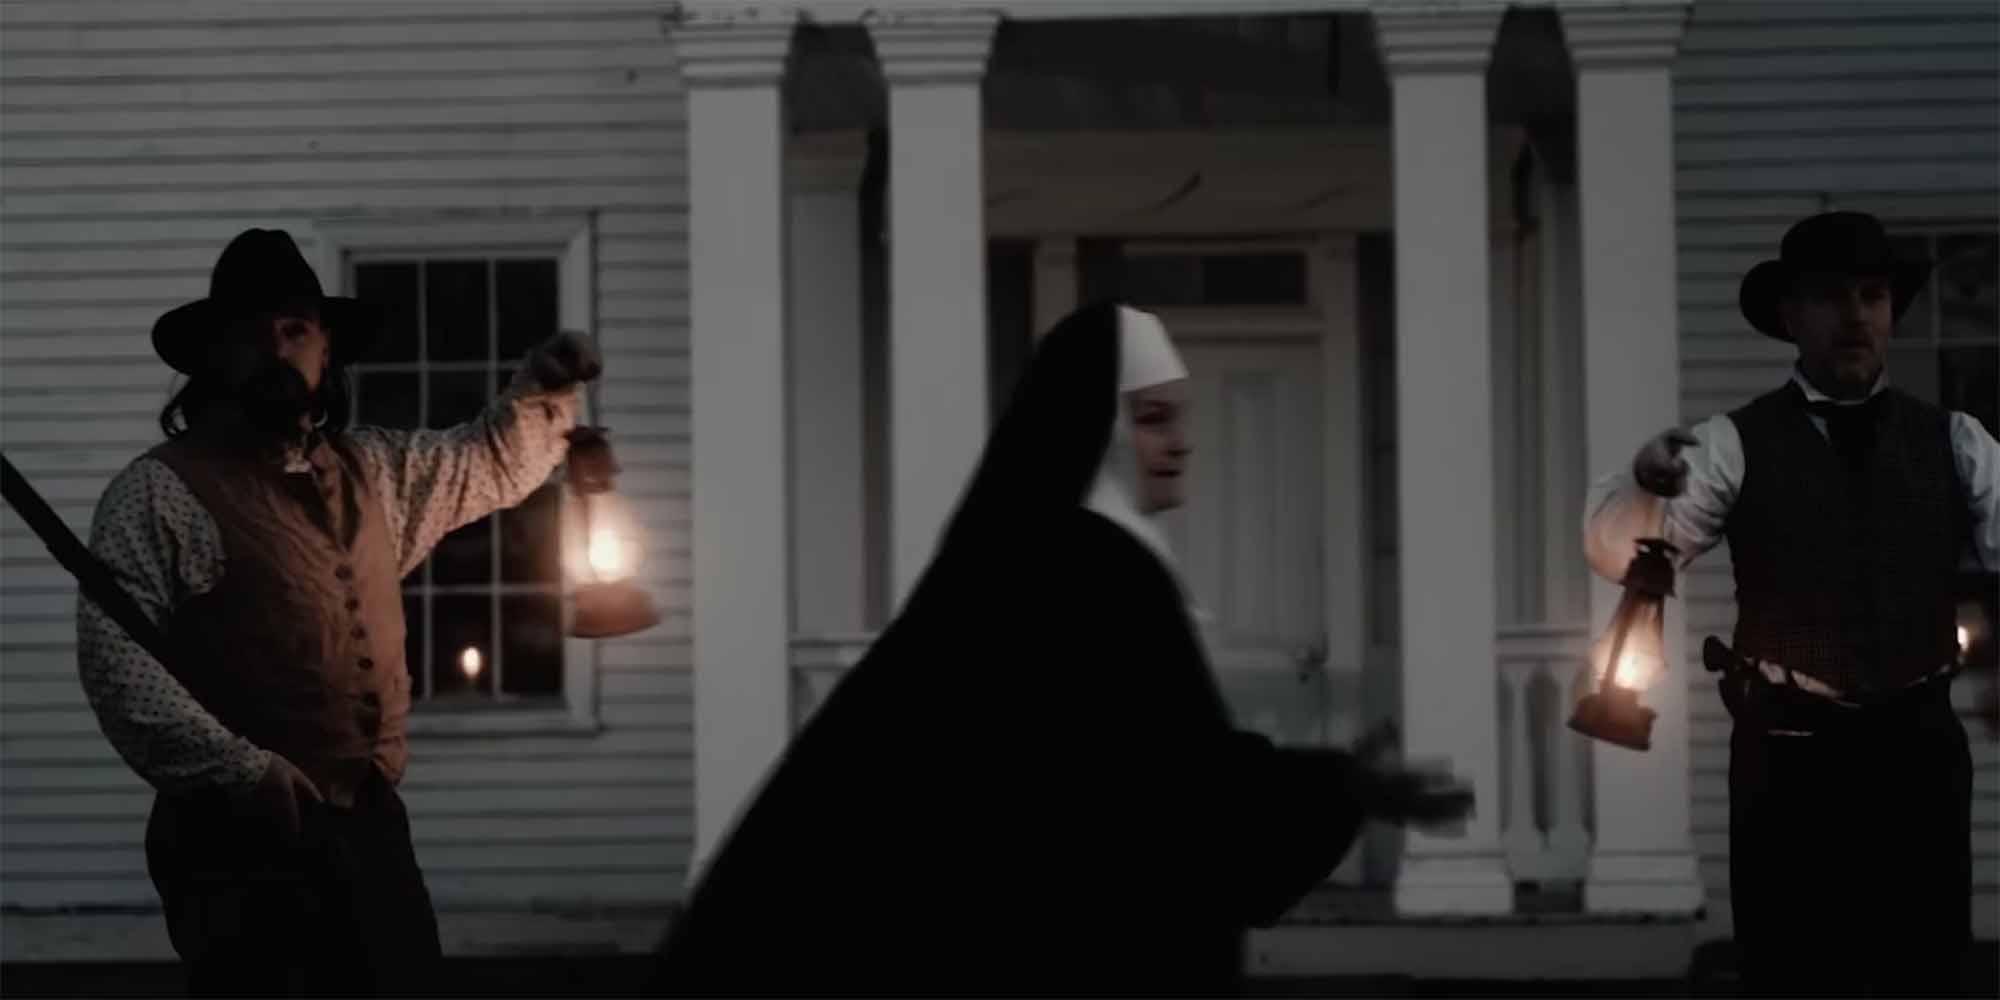 Men waving lanterns as a religious sister arrives